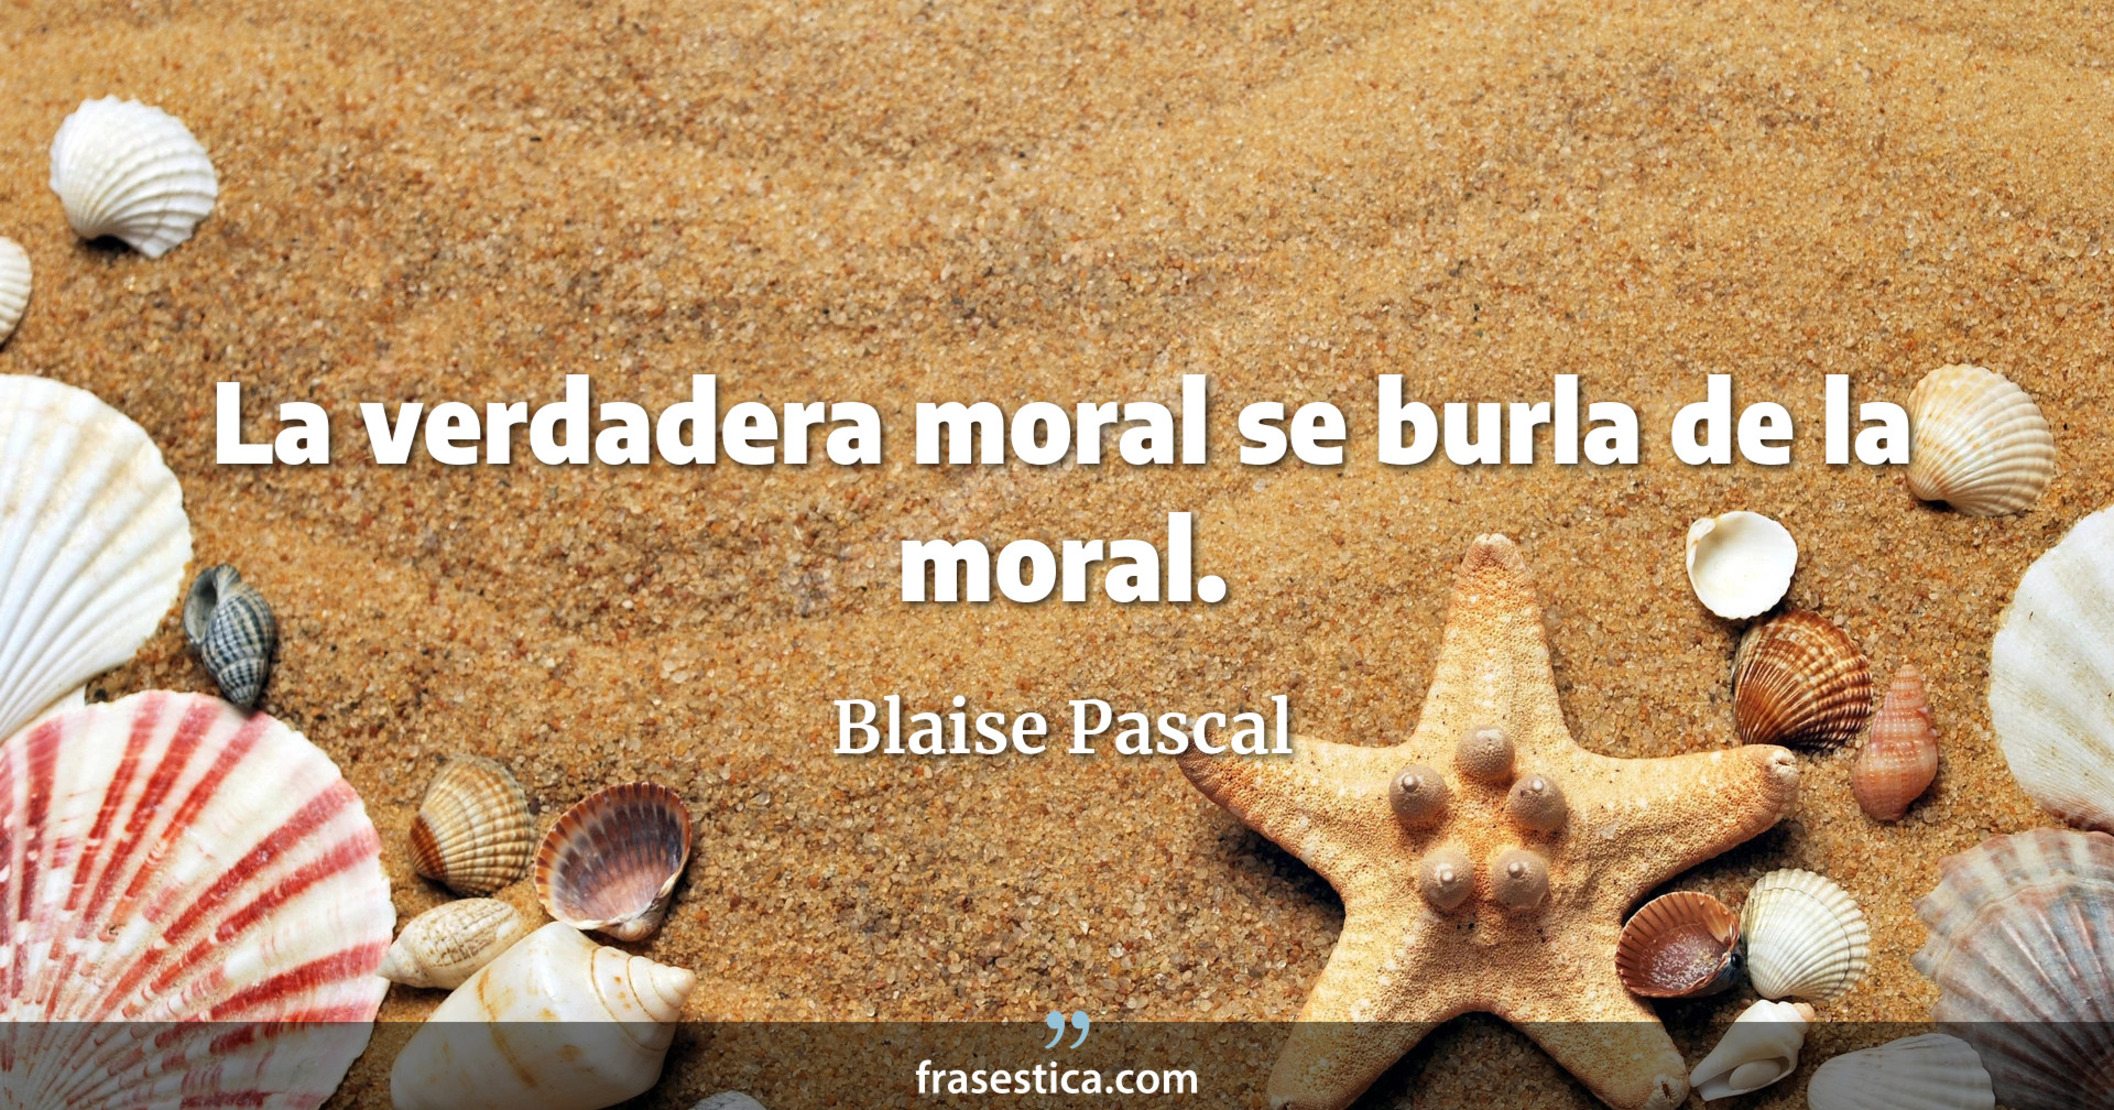 La verdadera moral se burla de la moral. - Blaise Pascal